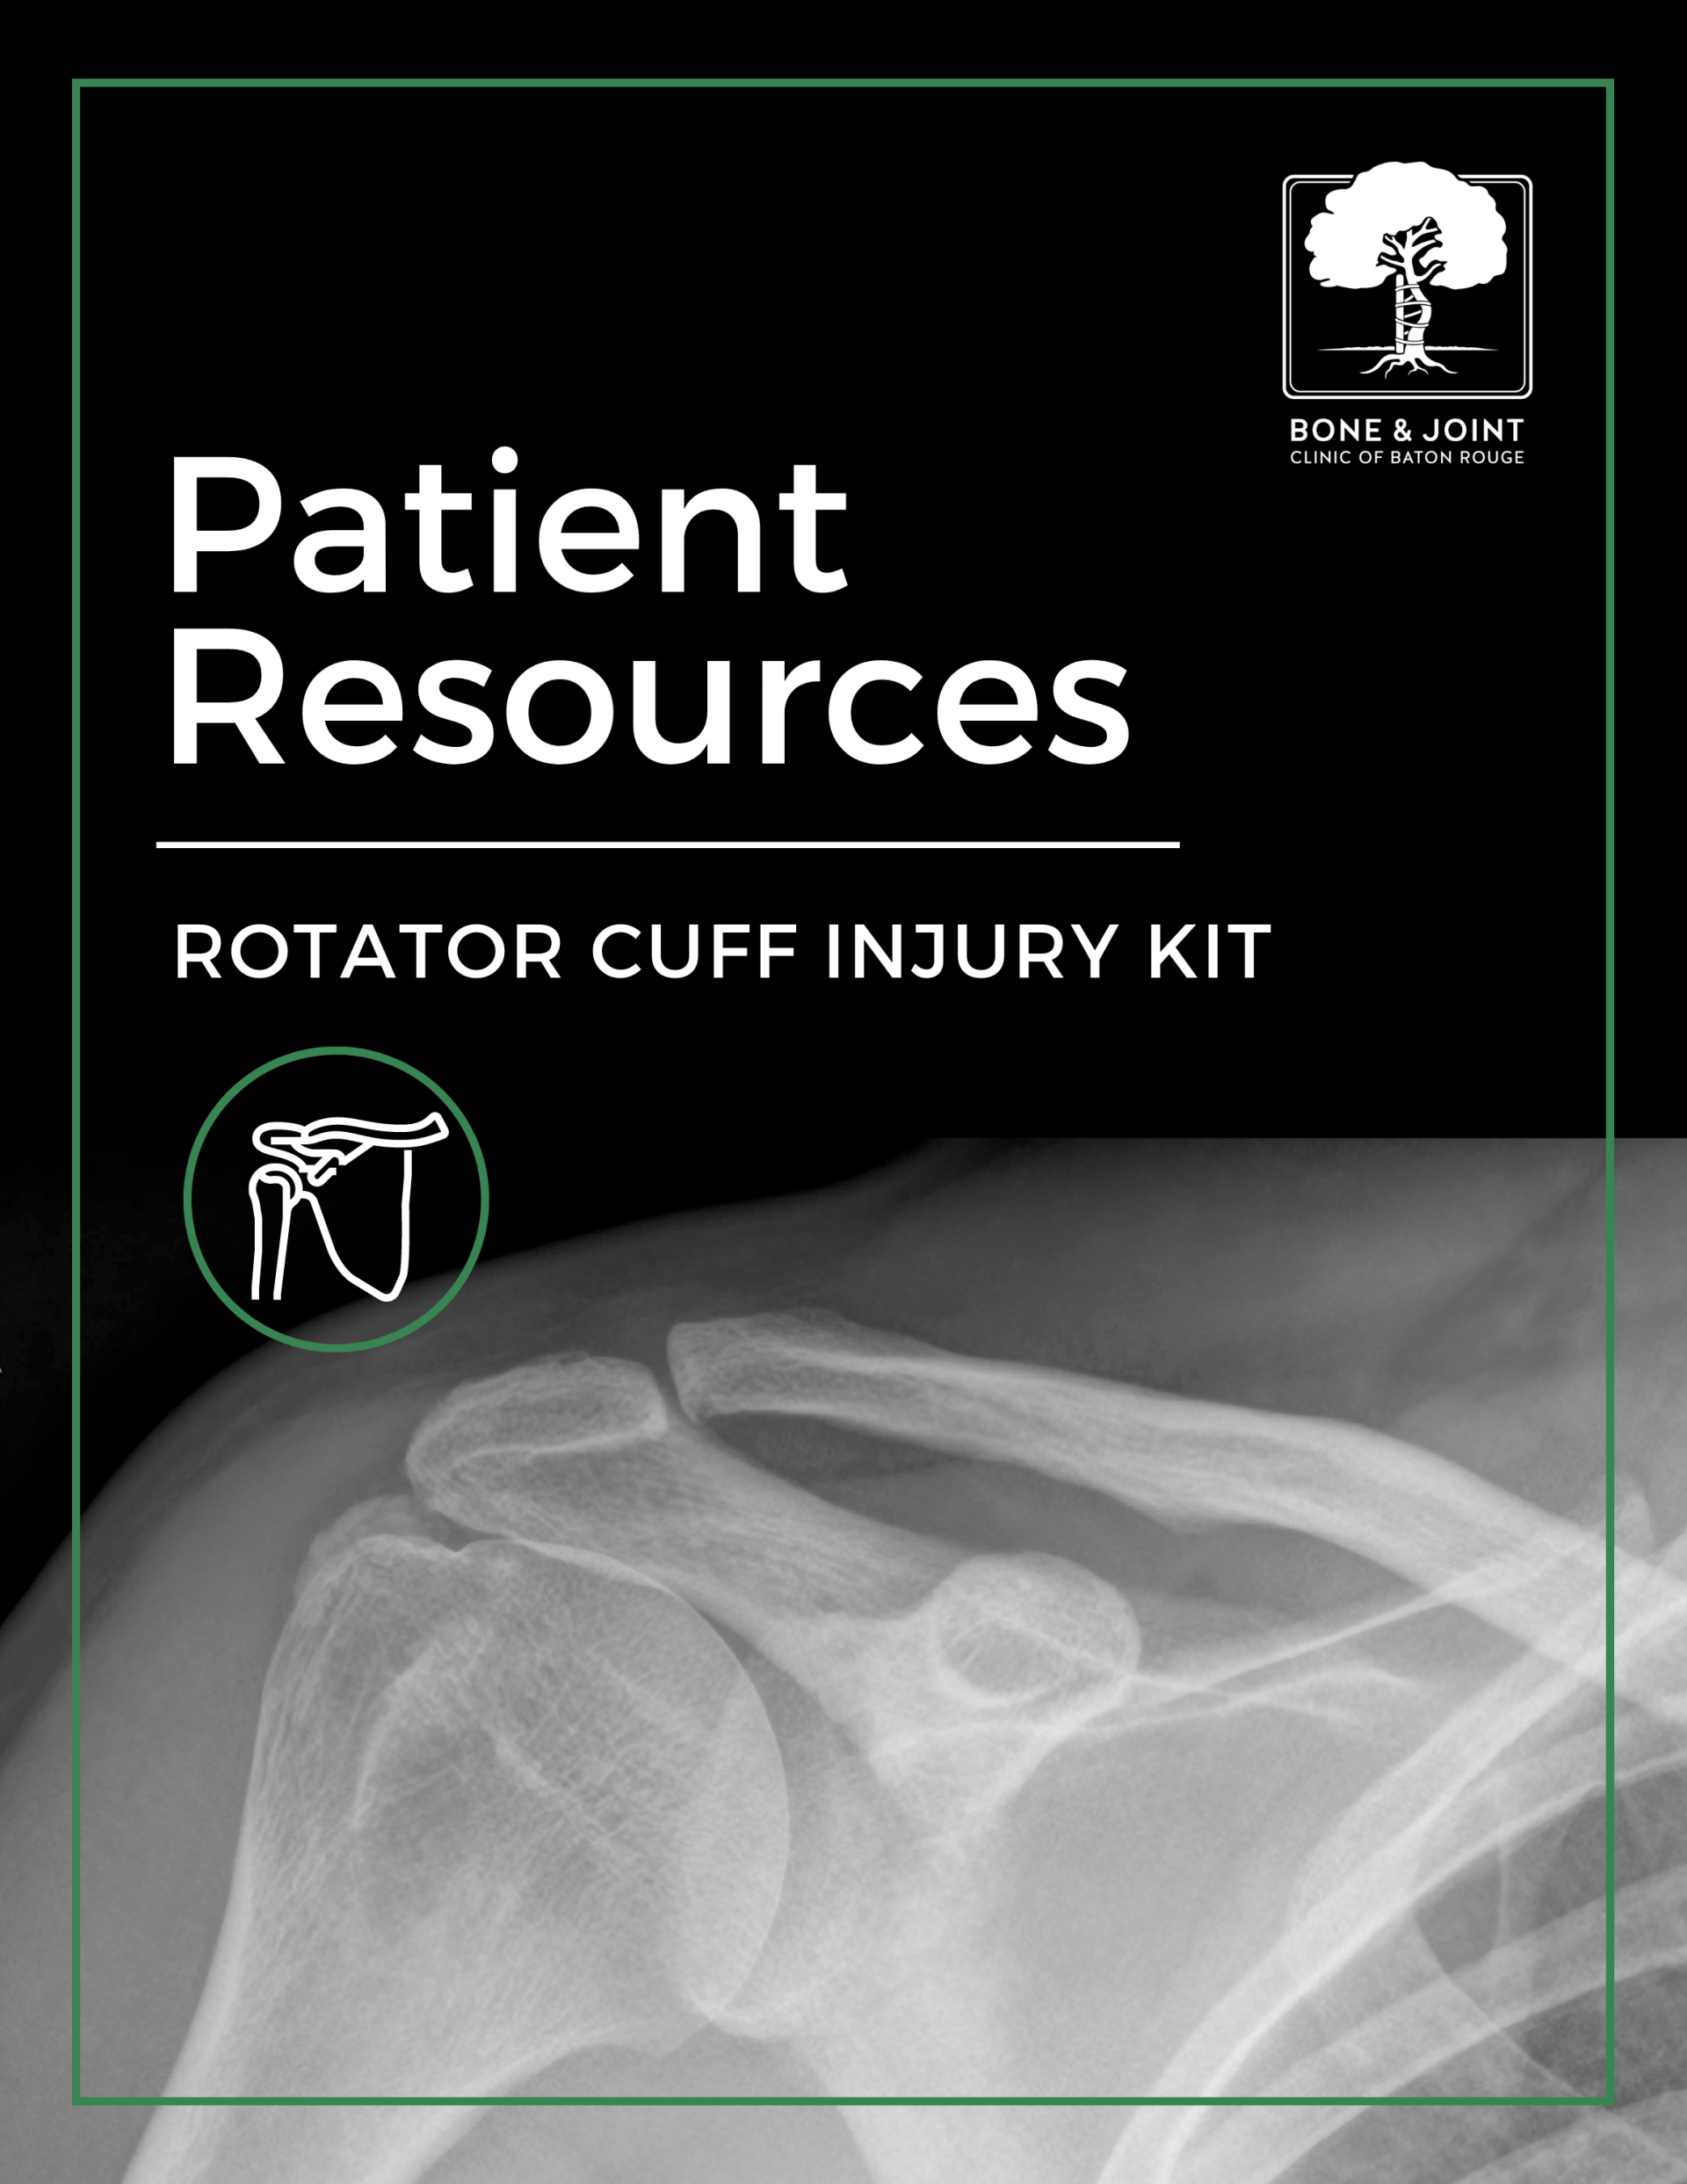 Rotator cuff injury patient resource kit